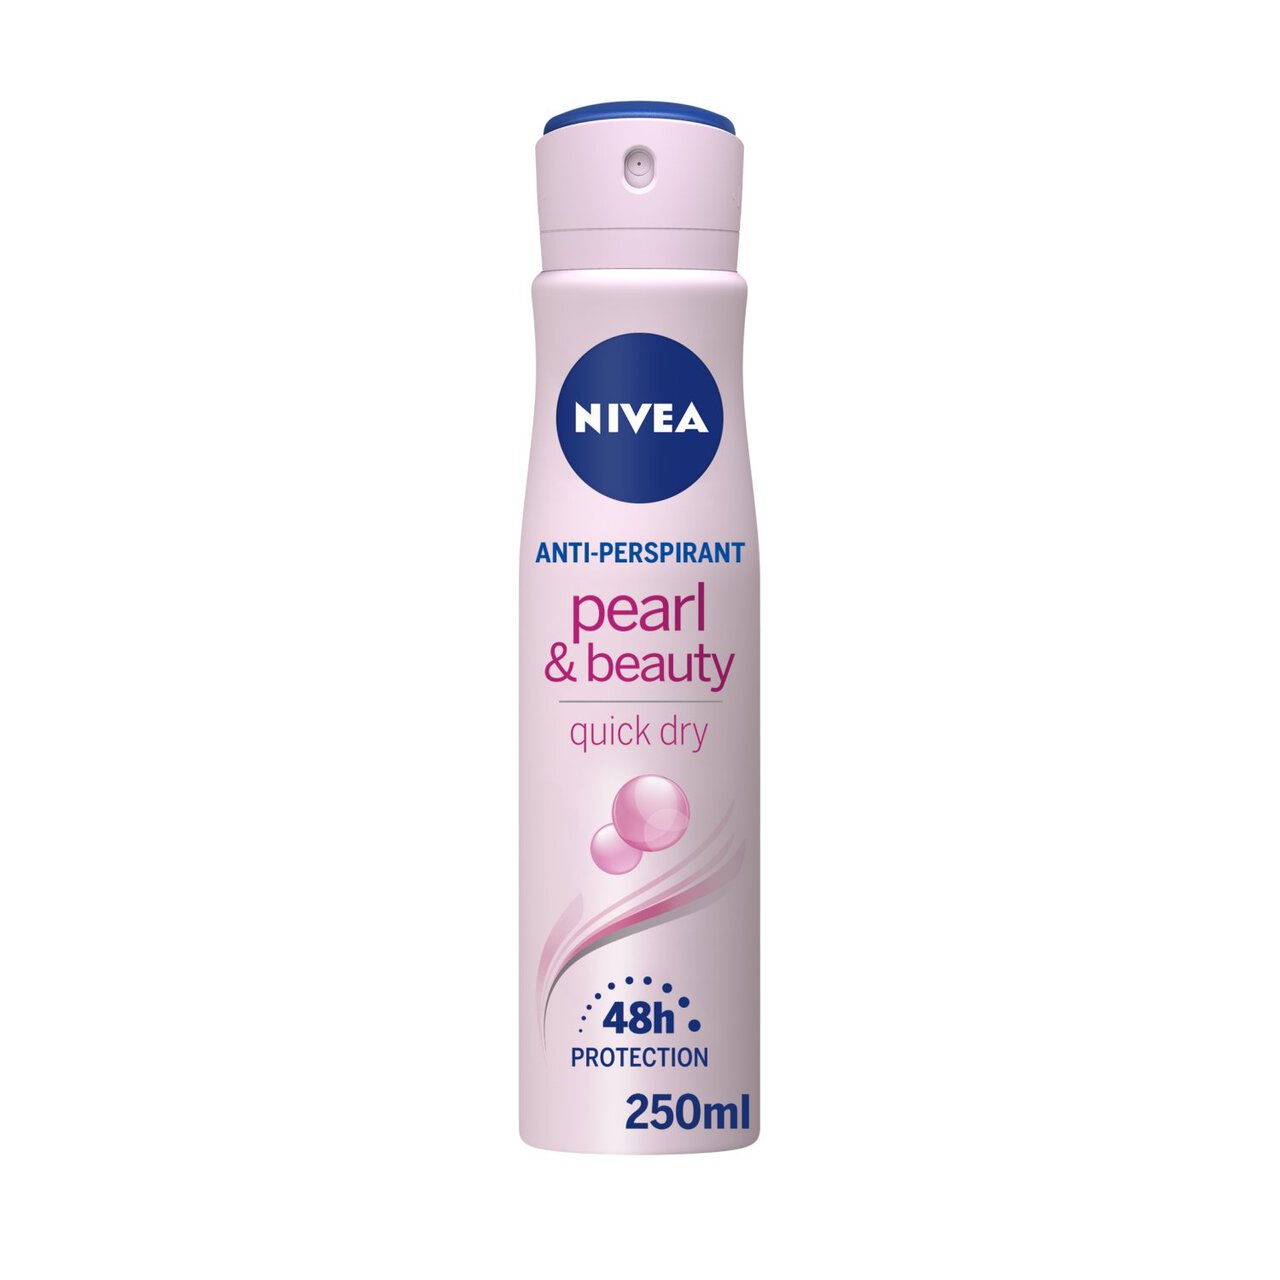 NIVEA Pearl & Beauty Anti-Perspirant Deodorant Spray 250ml